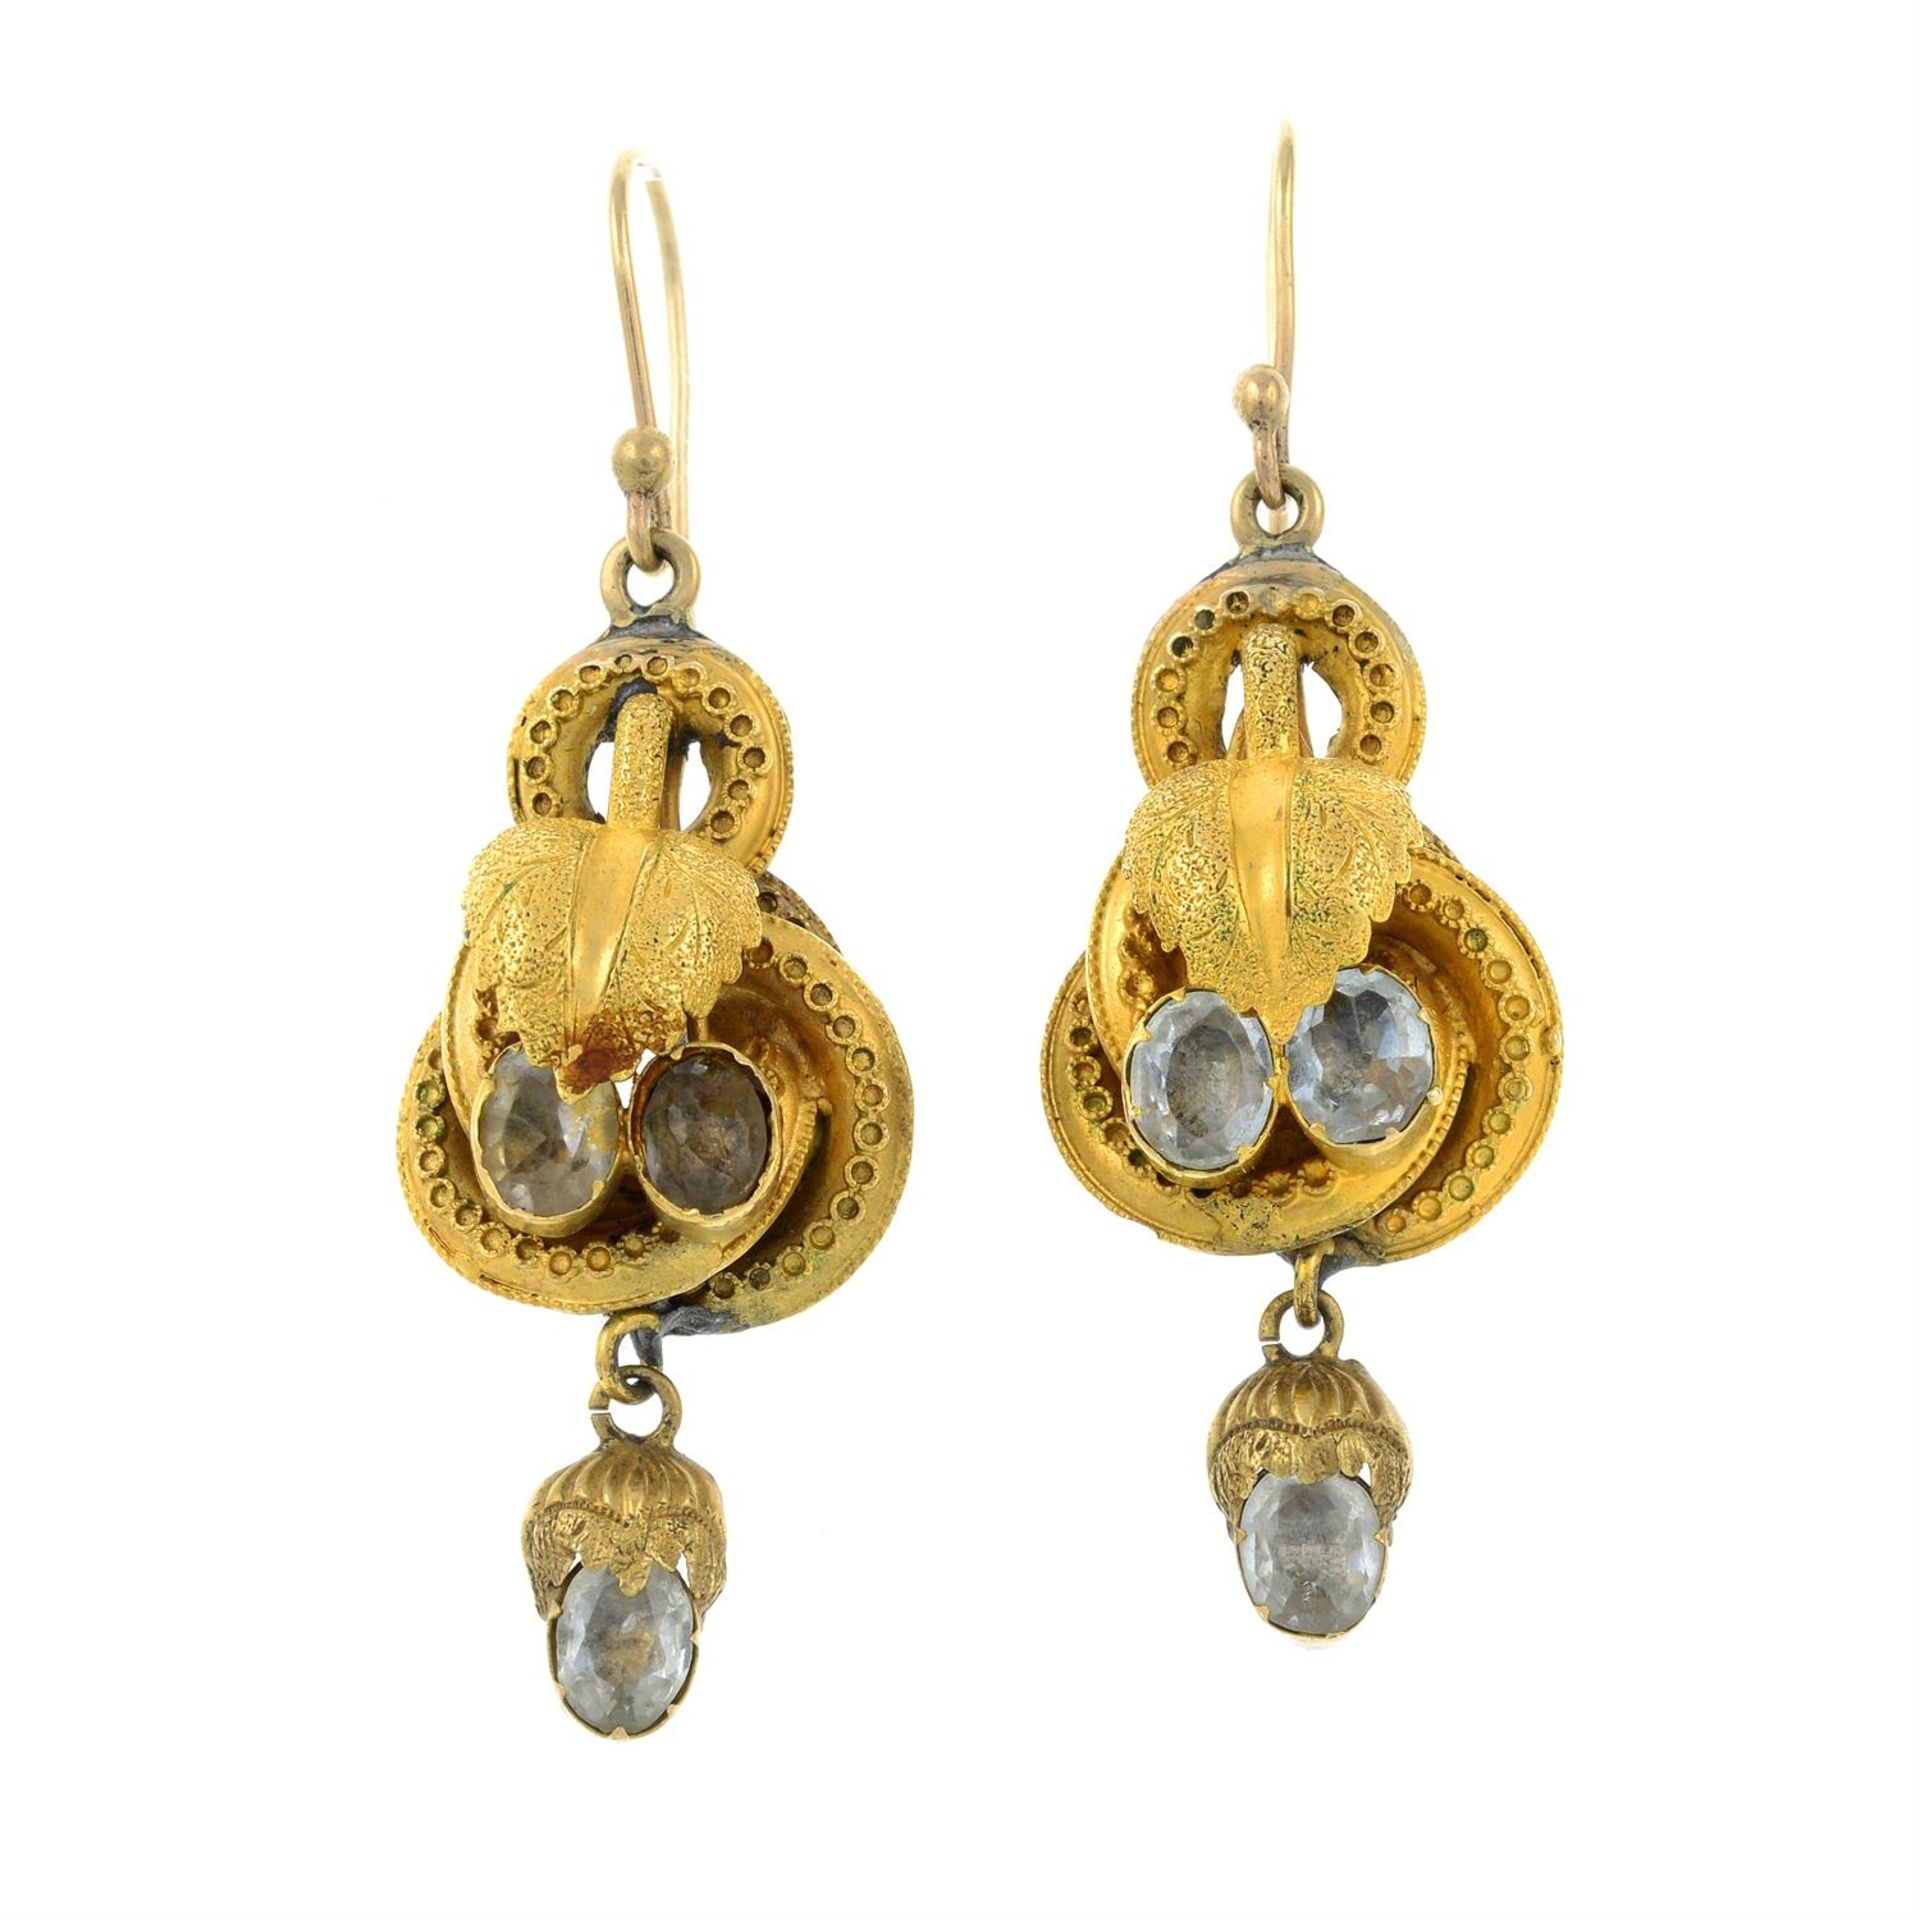 A pair of late 19th century gold, blue-gem foliate scroll earrings.